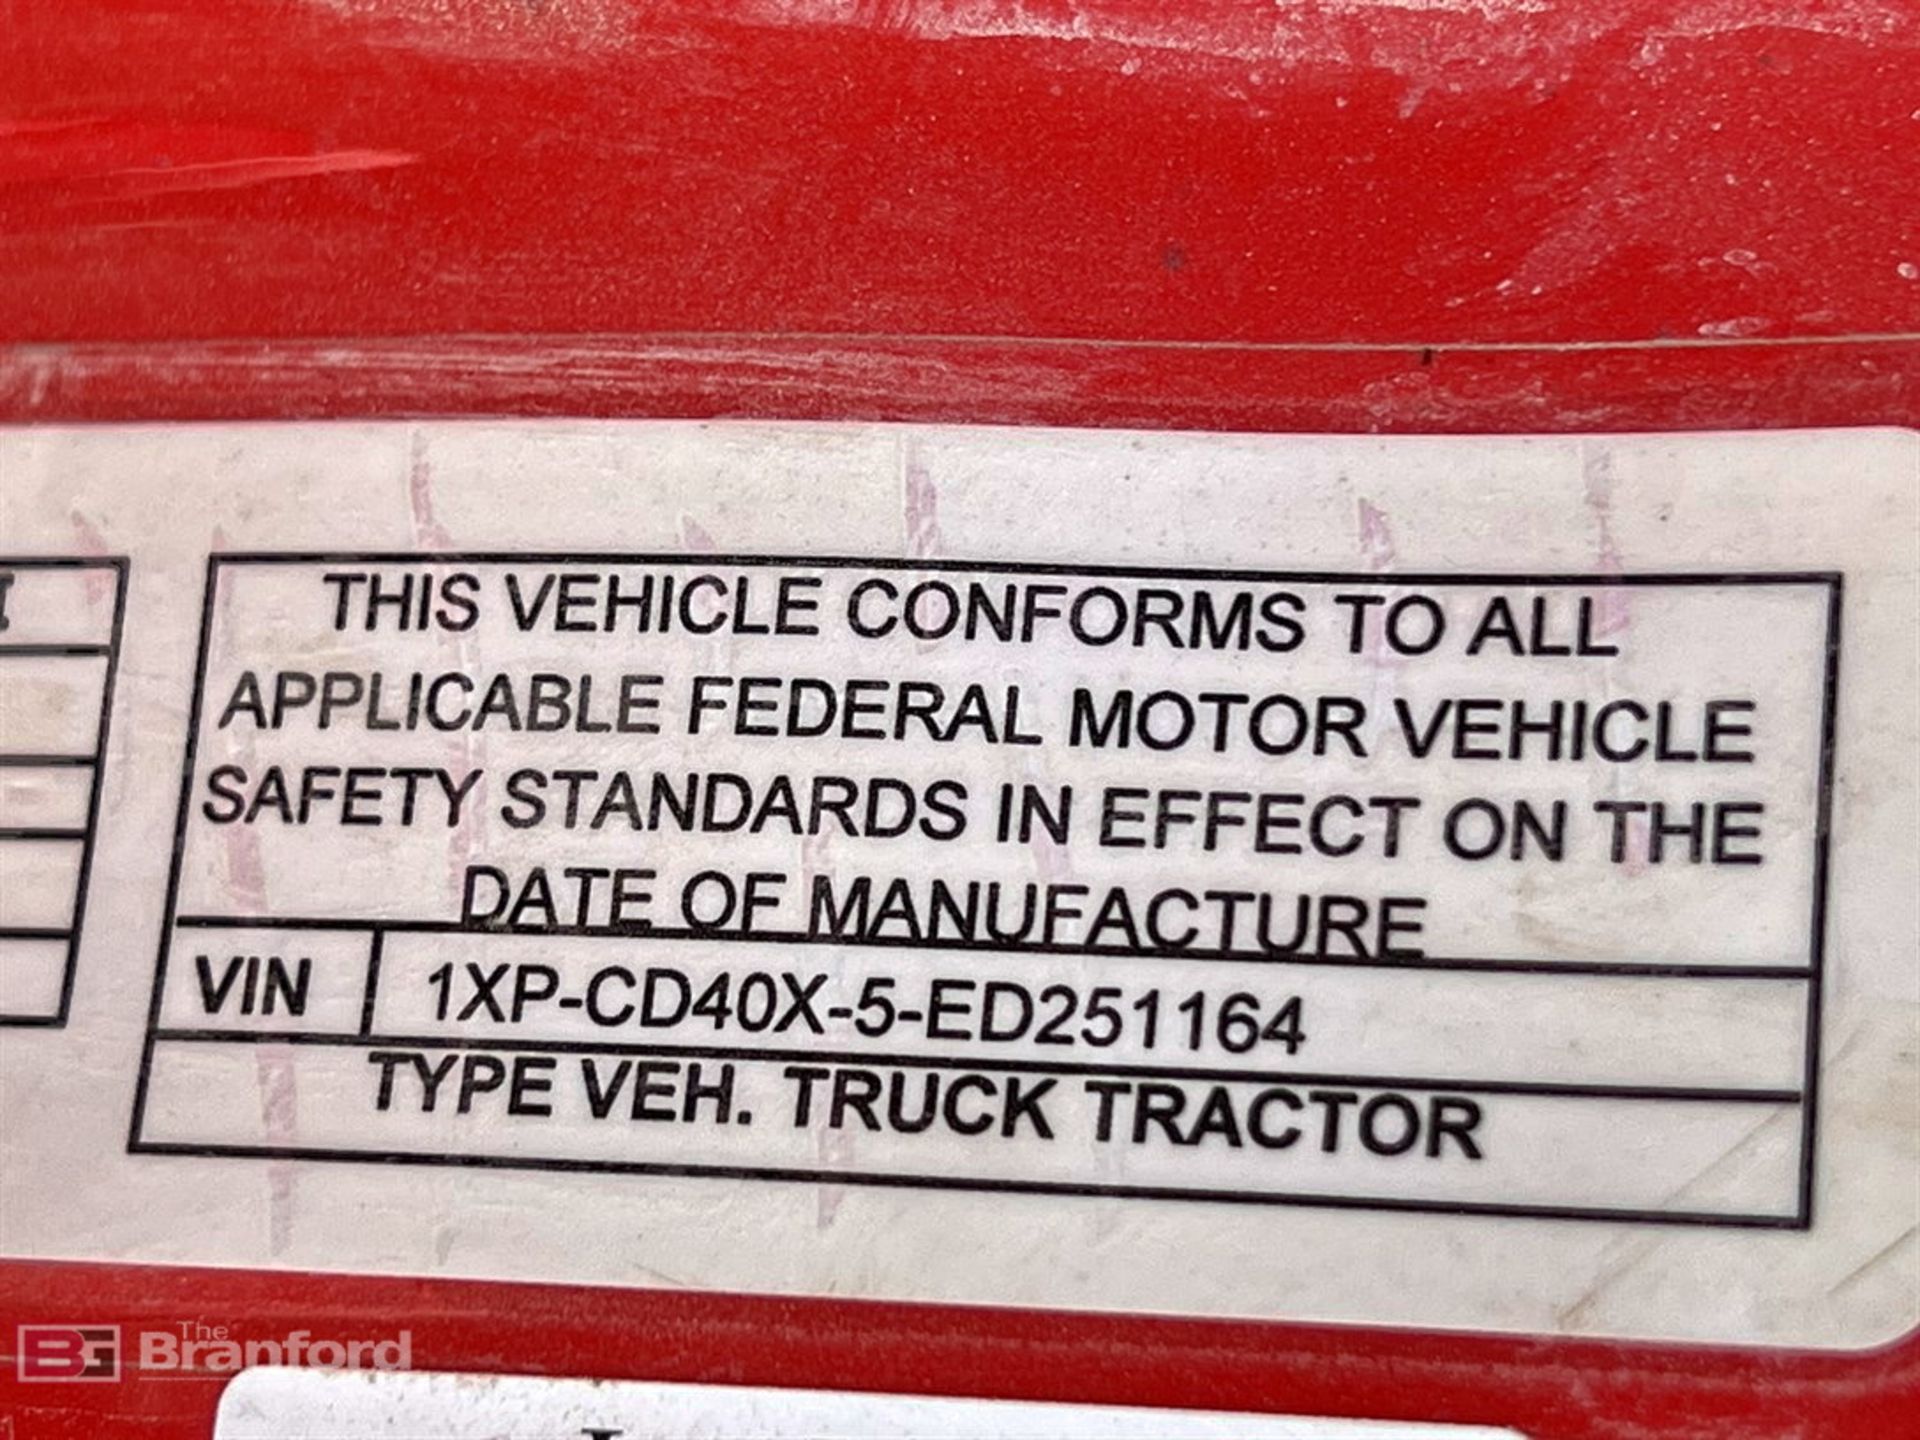 2014 Peterbilt 567 6x4 tandem axle truck tractor - Image 16 of 17